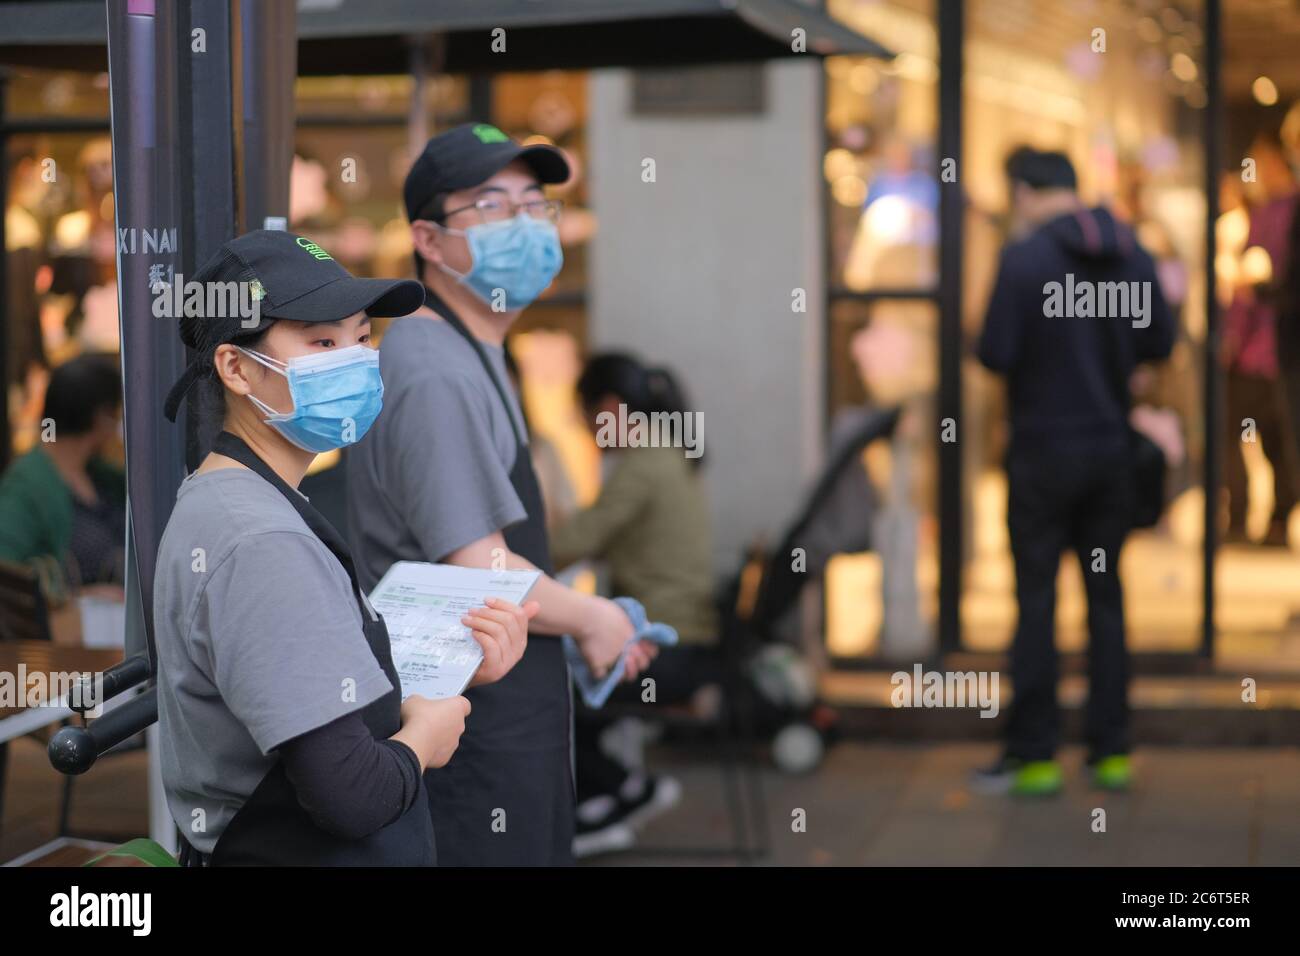 Restaurant staff wearing face mask to avoid covid-19 coronavirus, standing outside restaurant. Blur customers background Stock Photo